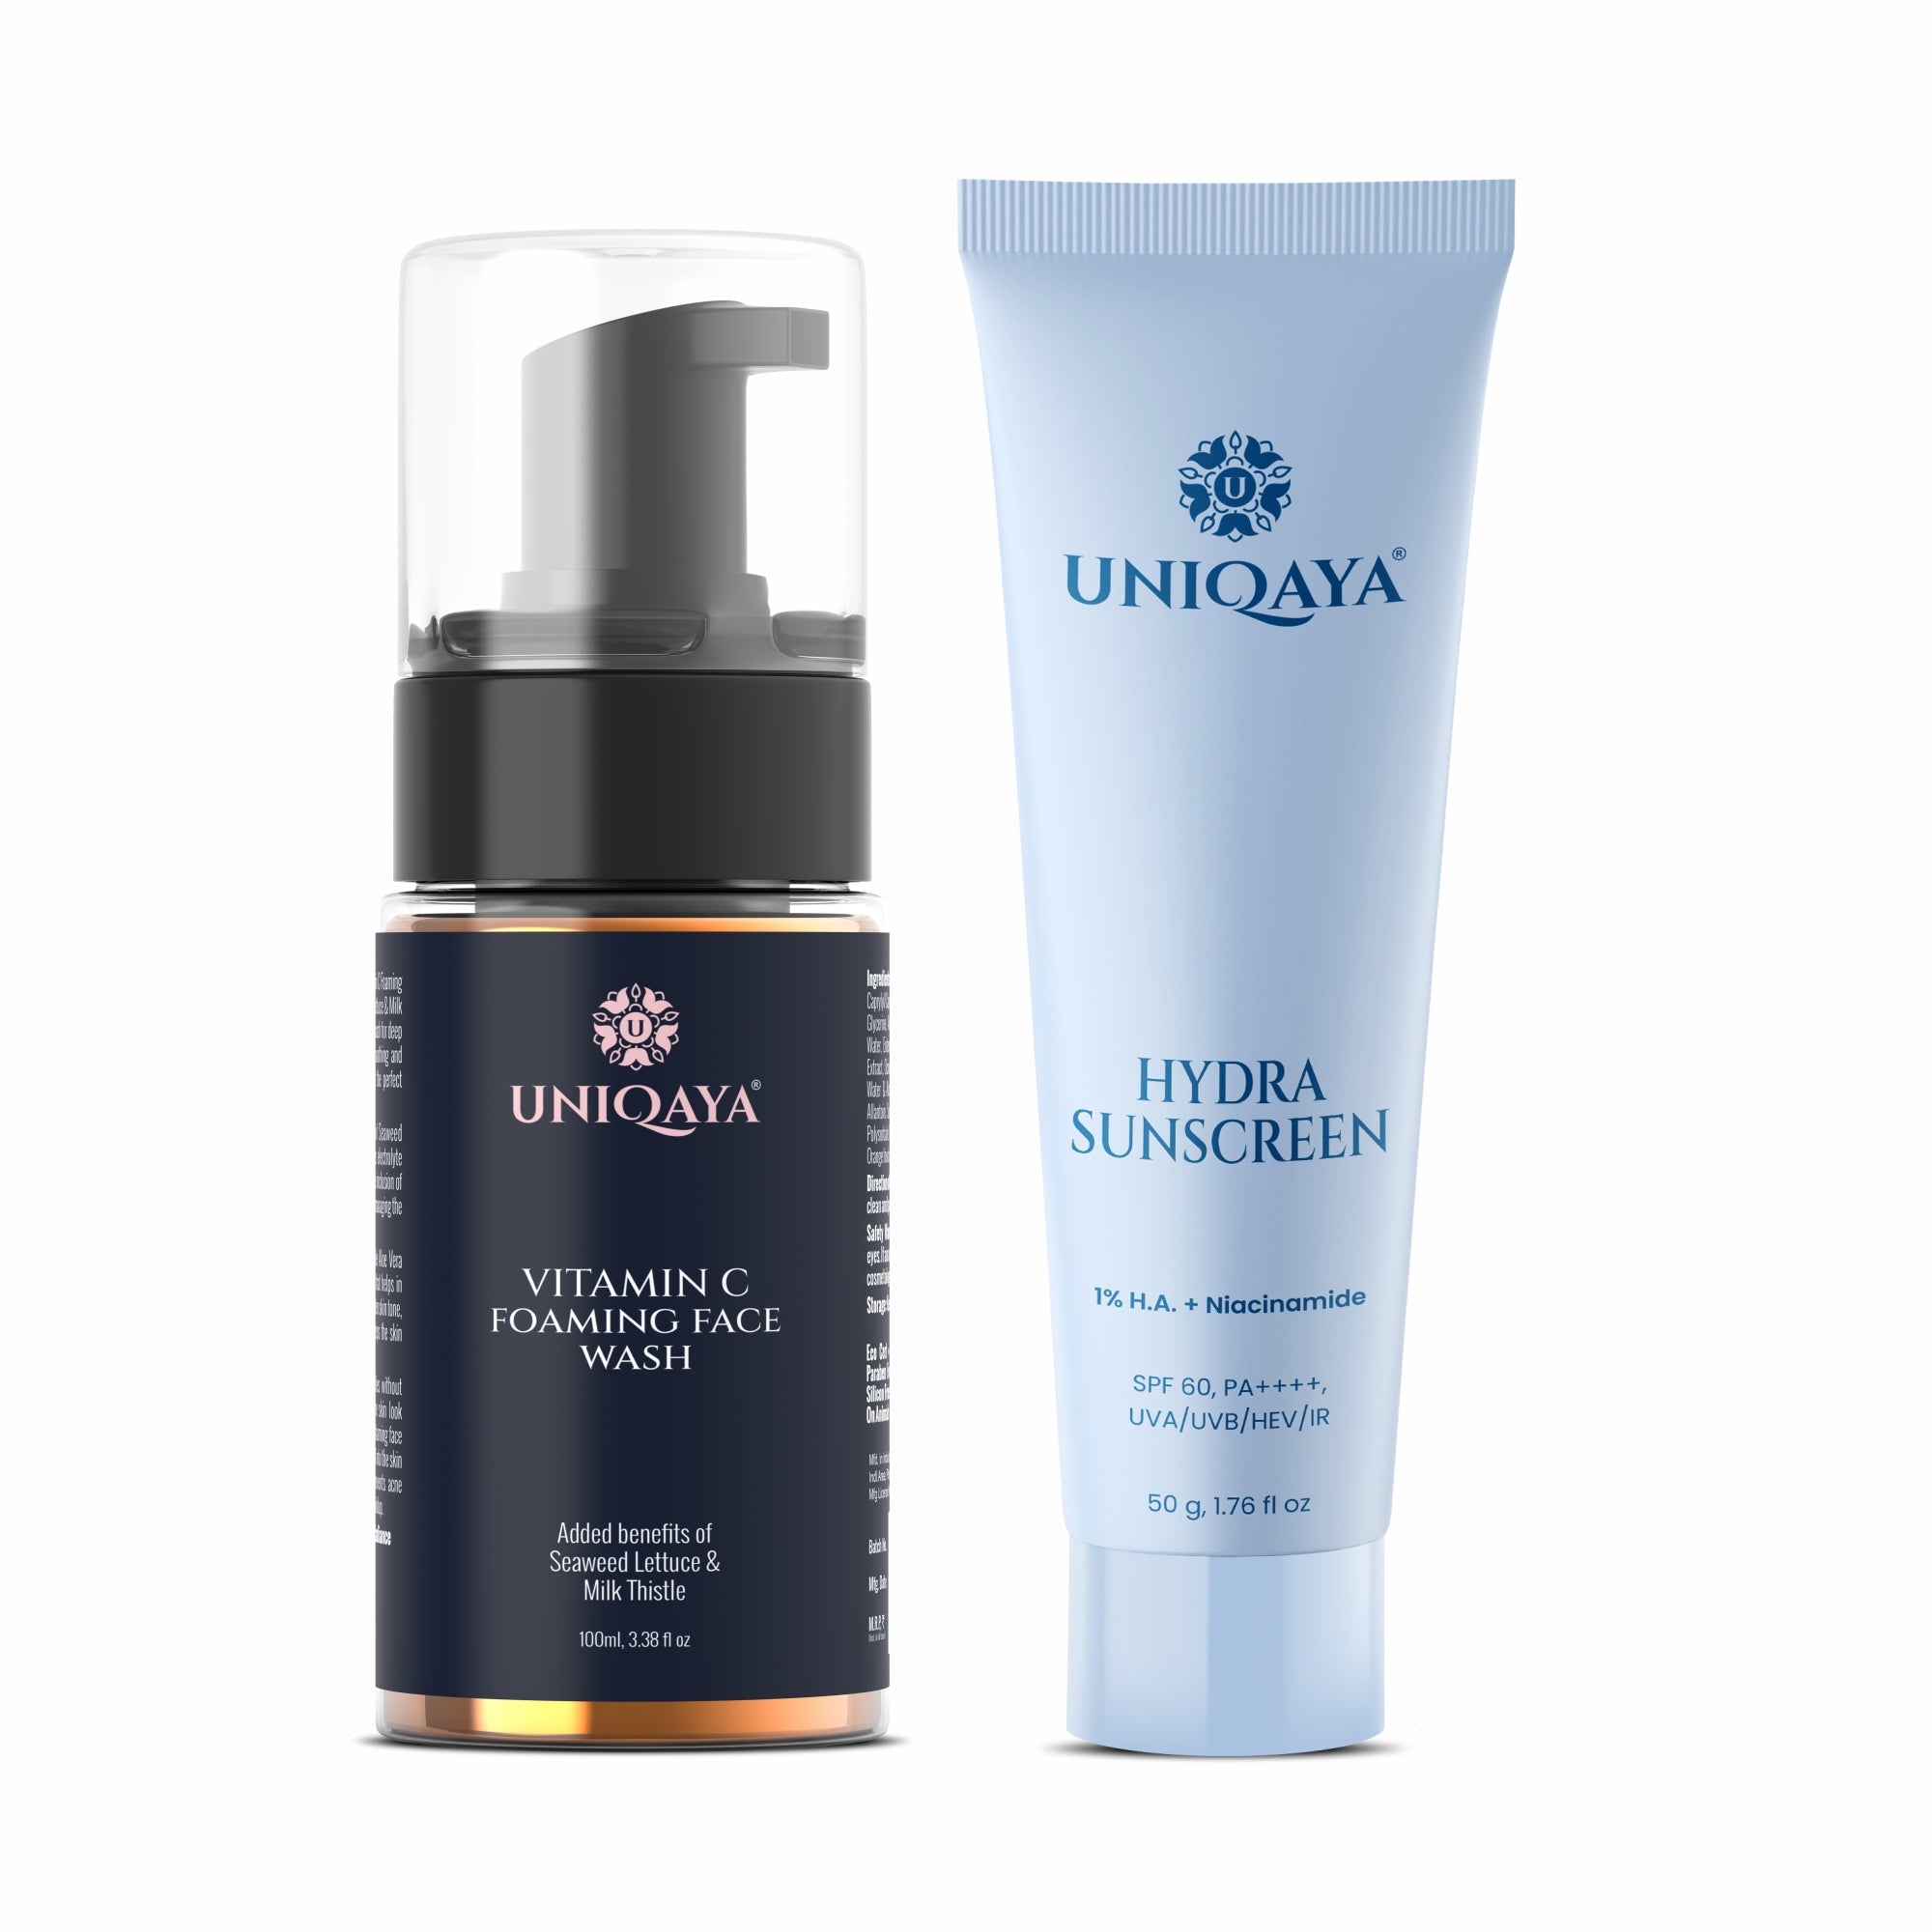 Vitamin C Foaming Face Wash & Niacinamide Sunscreen SPF 60 PA++++ | Skin Care Combo